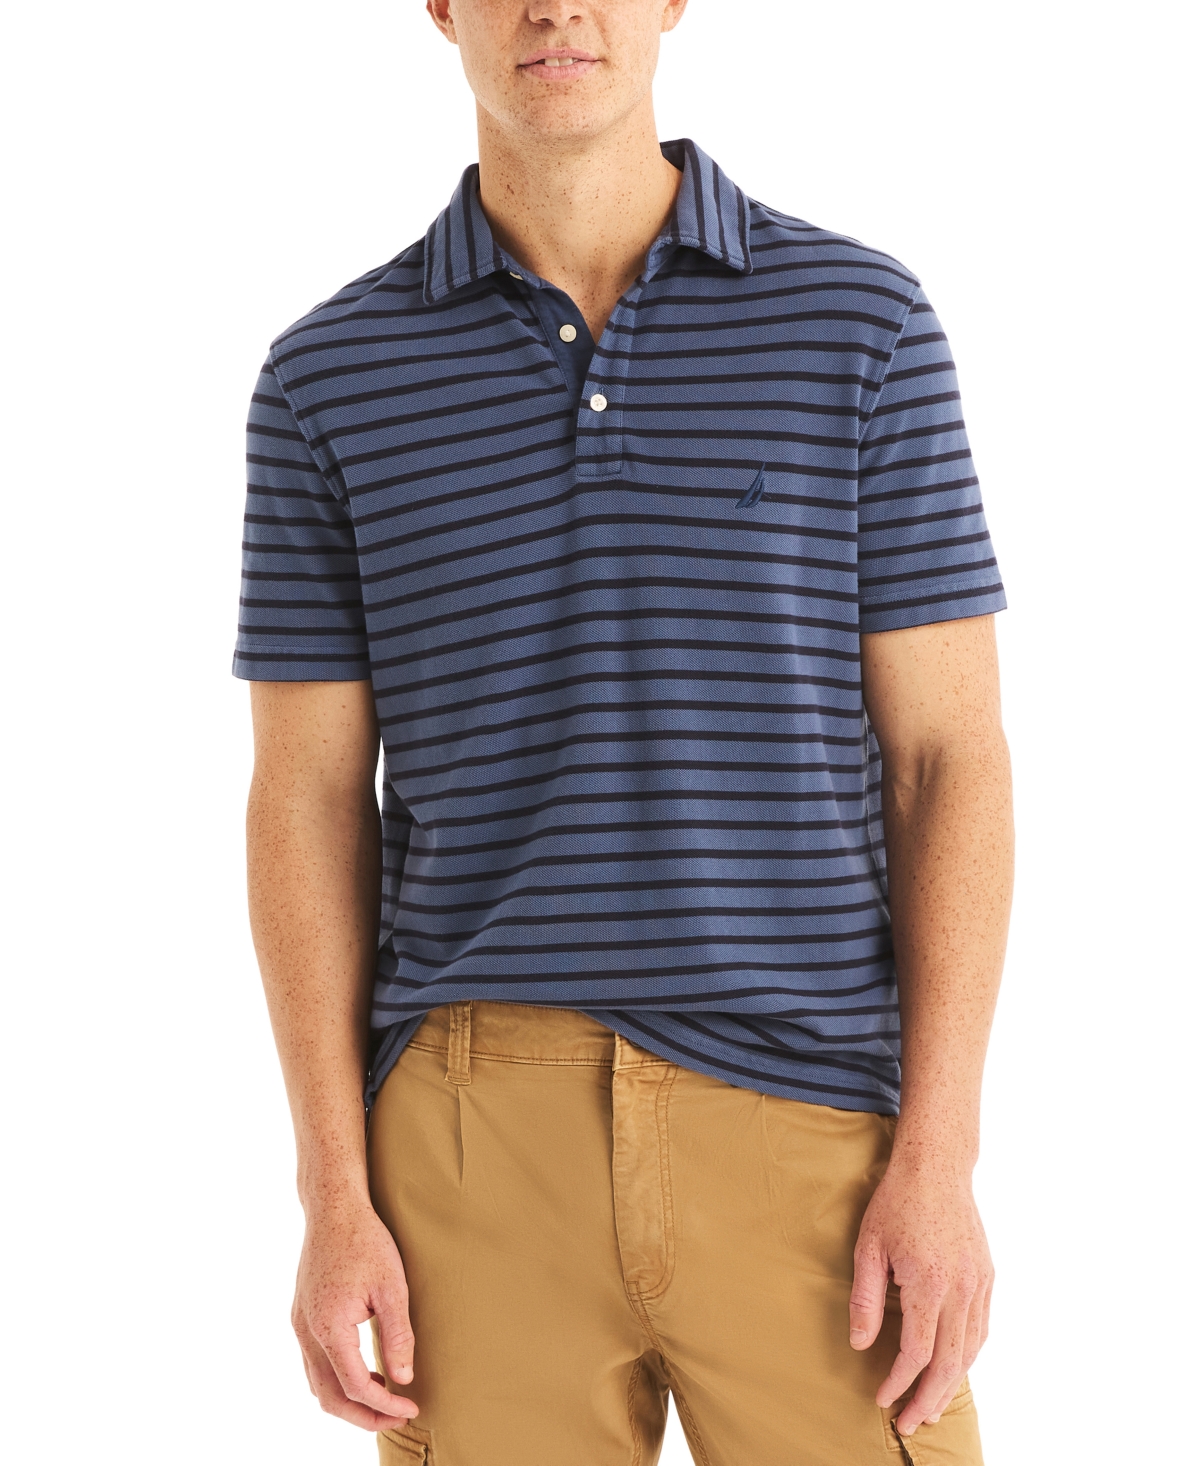 Men's Striped Pique Short Sleeve Polo Shirt - Pepper Red